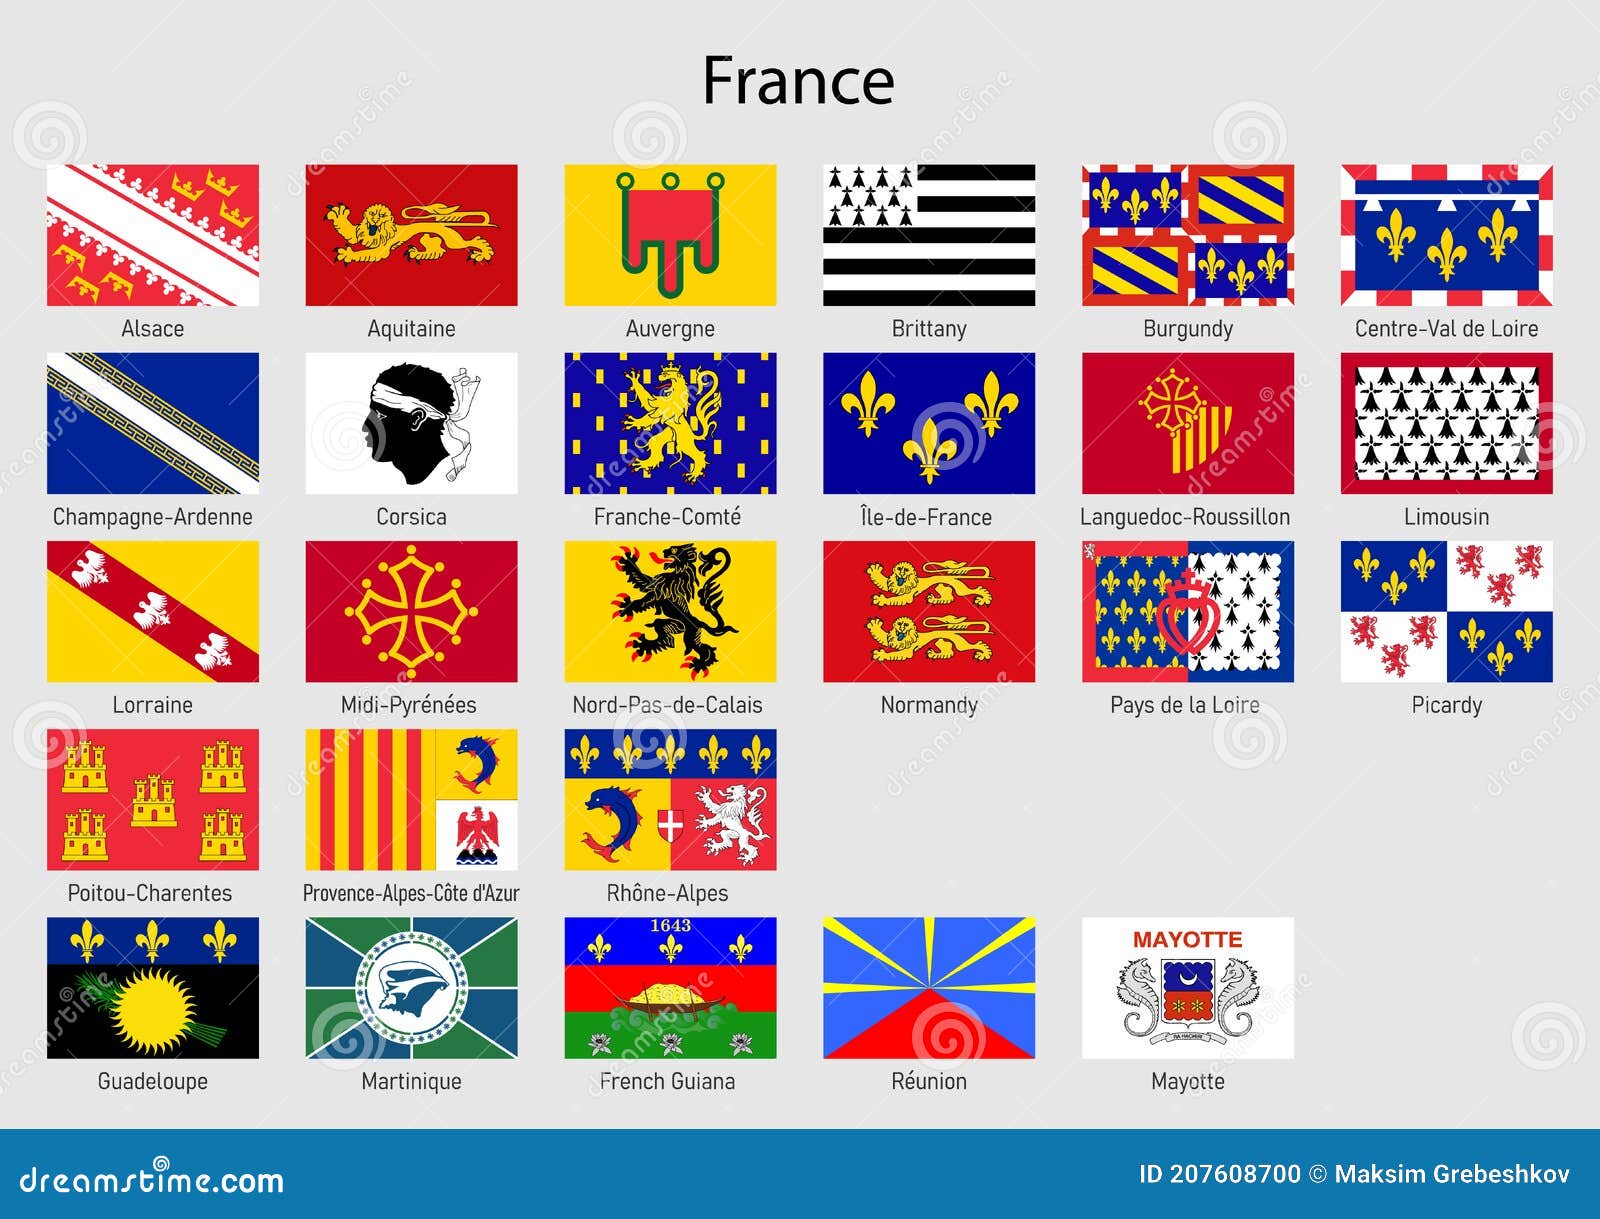 FRIDGE MAGNET Brittany France Flag 